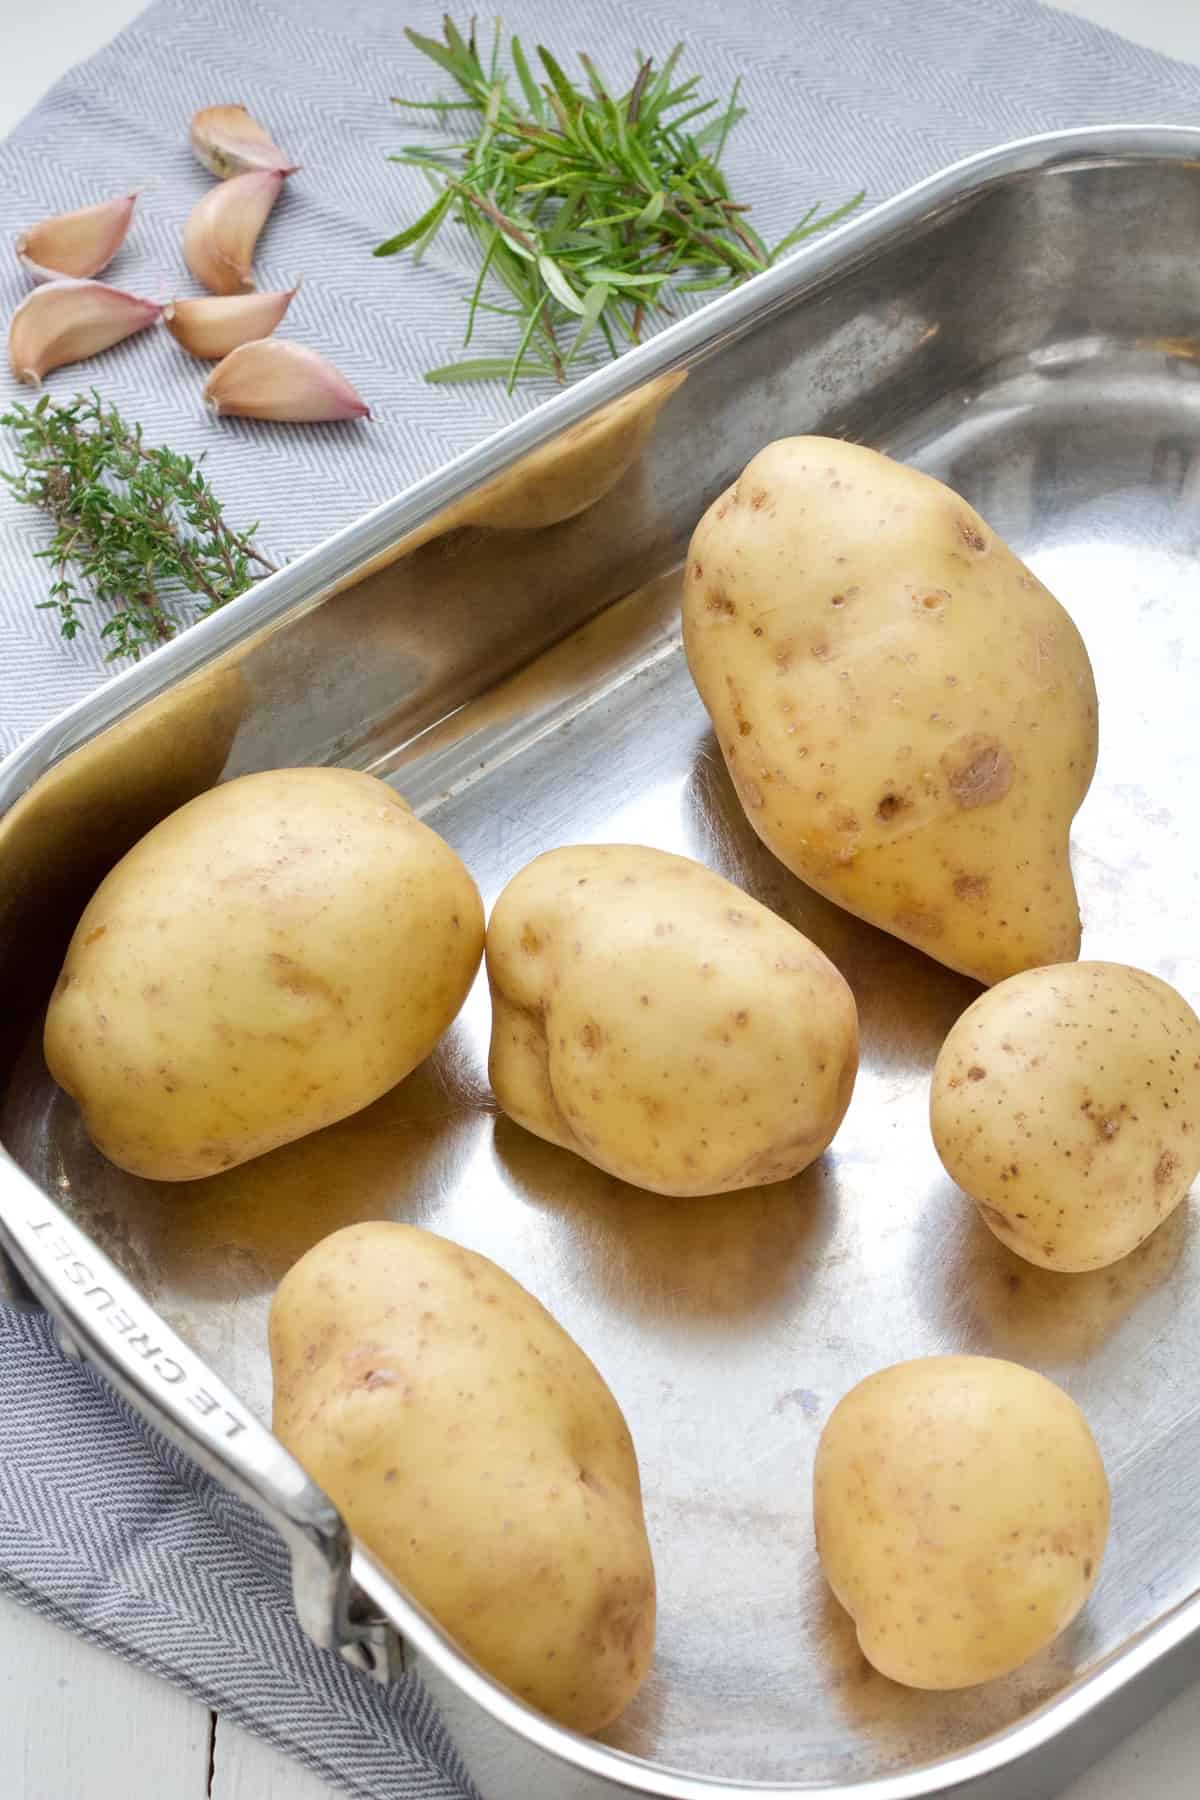 Unpeeled, raw potatoes in a tin, herbs and garlic.